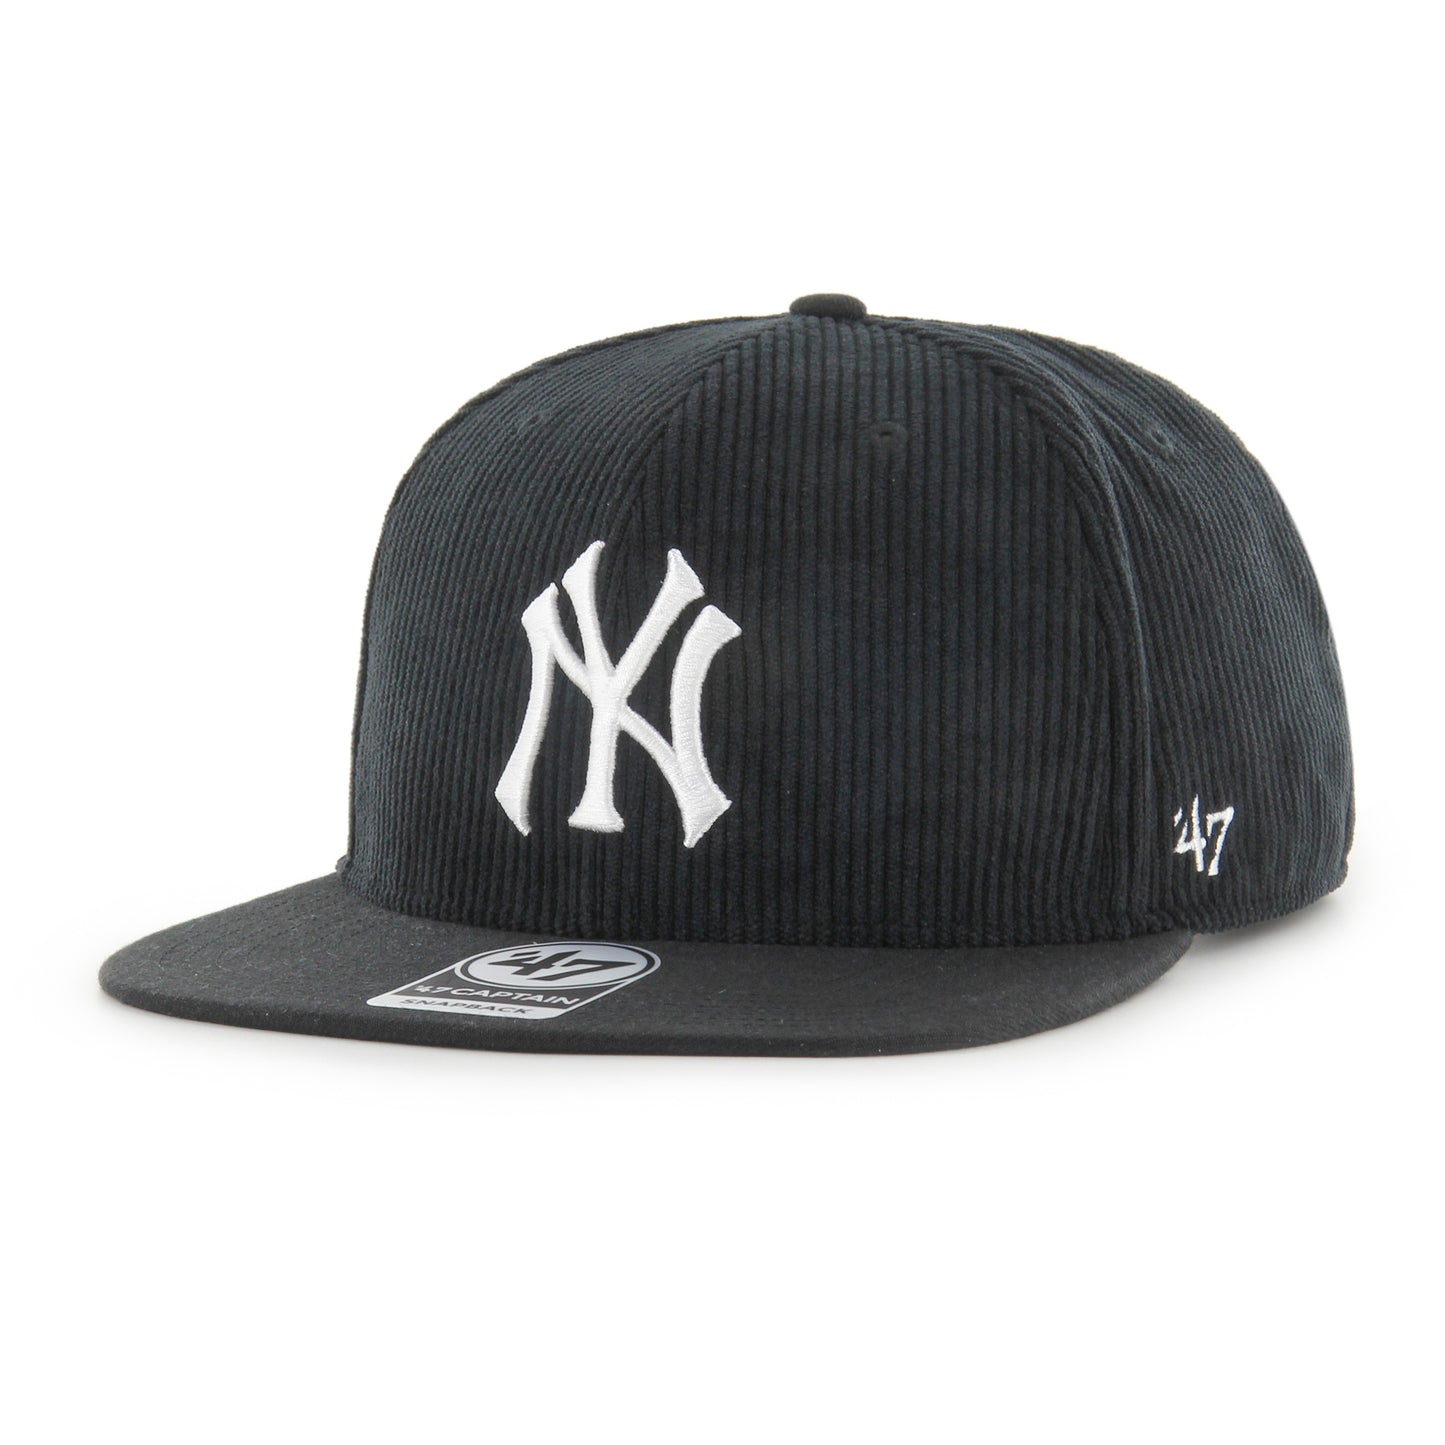 MLB NEW YORK YANKEES THICK CORD TT 47 CAPTAIN BLACK